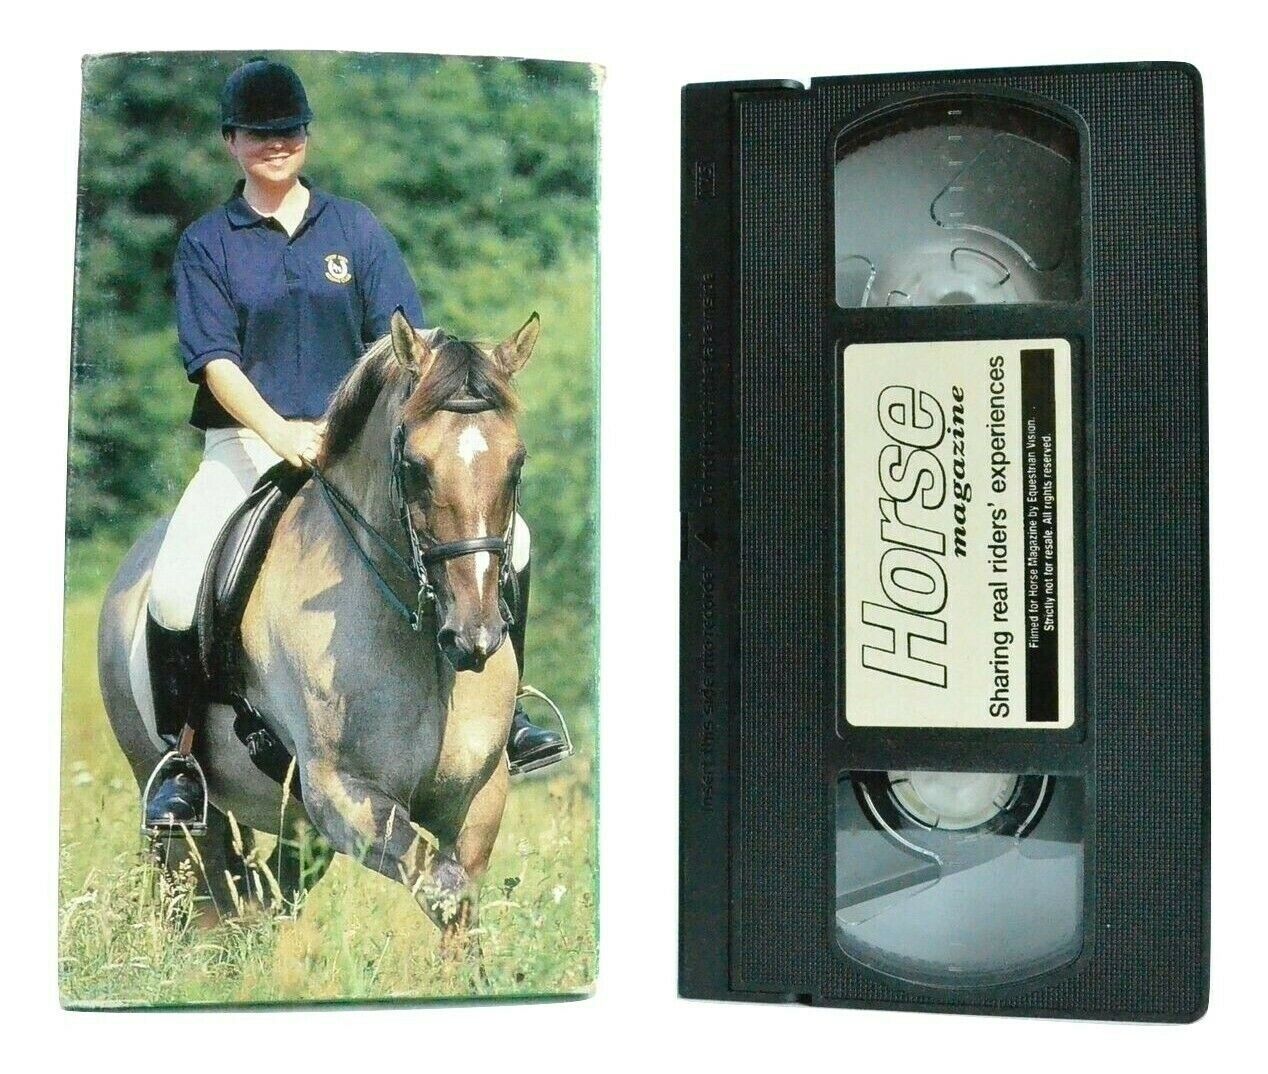 Horse Magazine - Carton Box - Real Riders Experiences - Advice - Pal VHS-